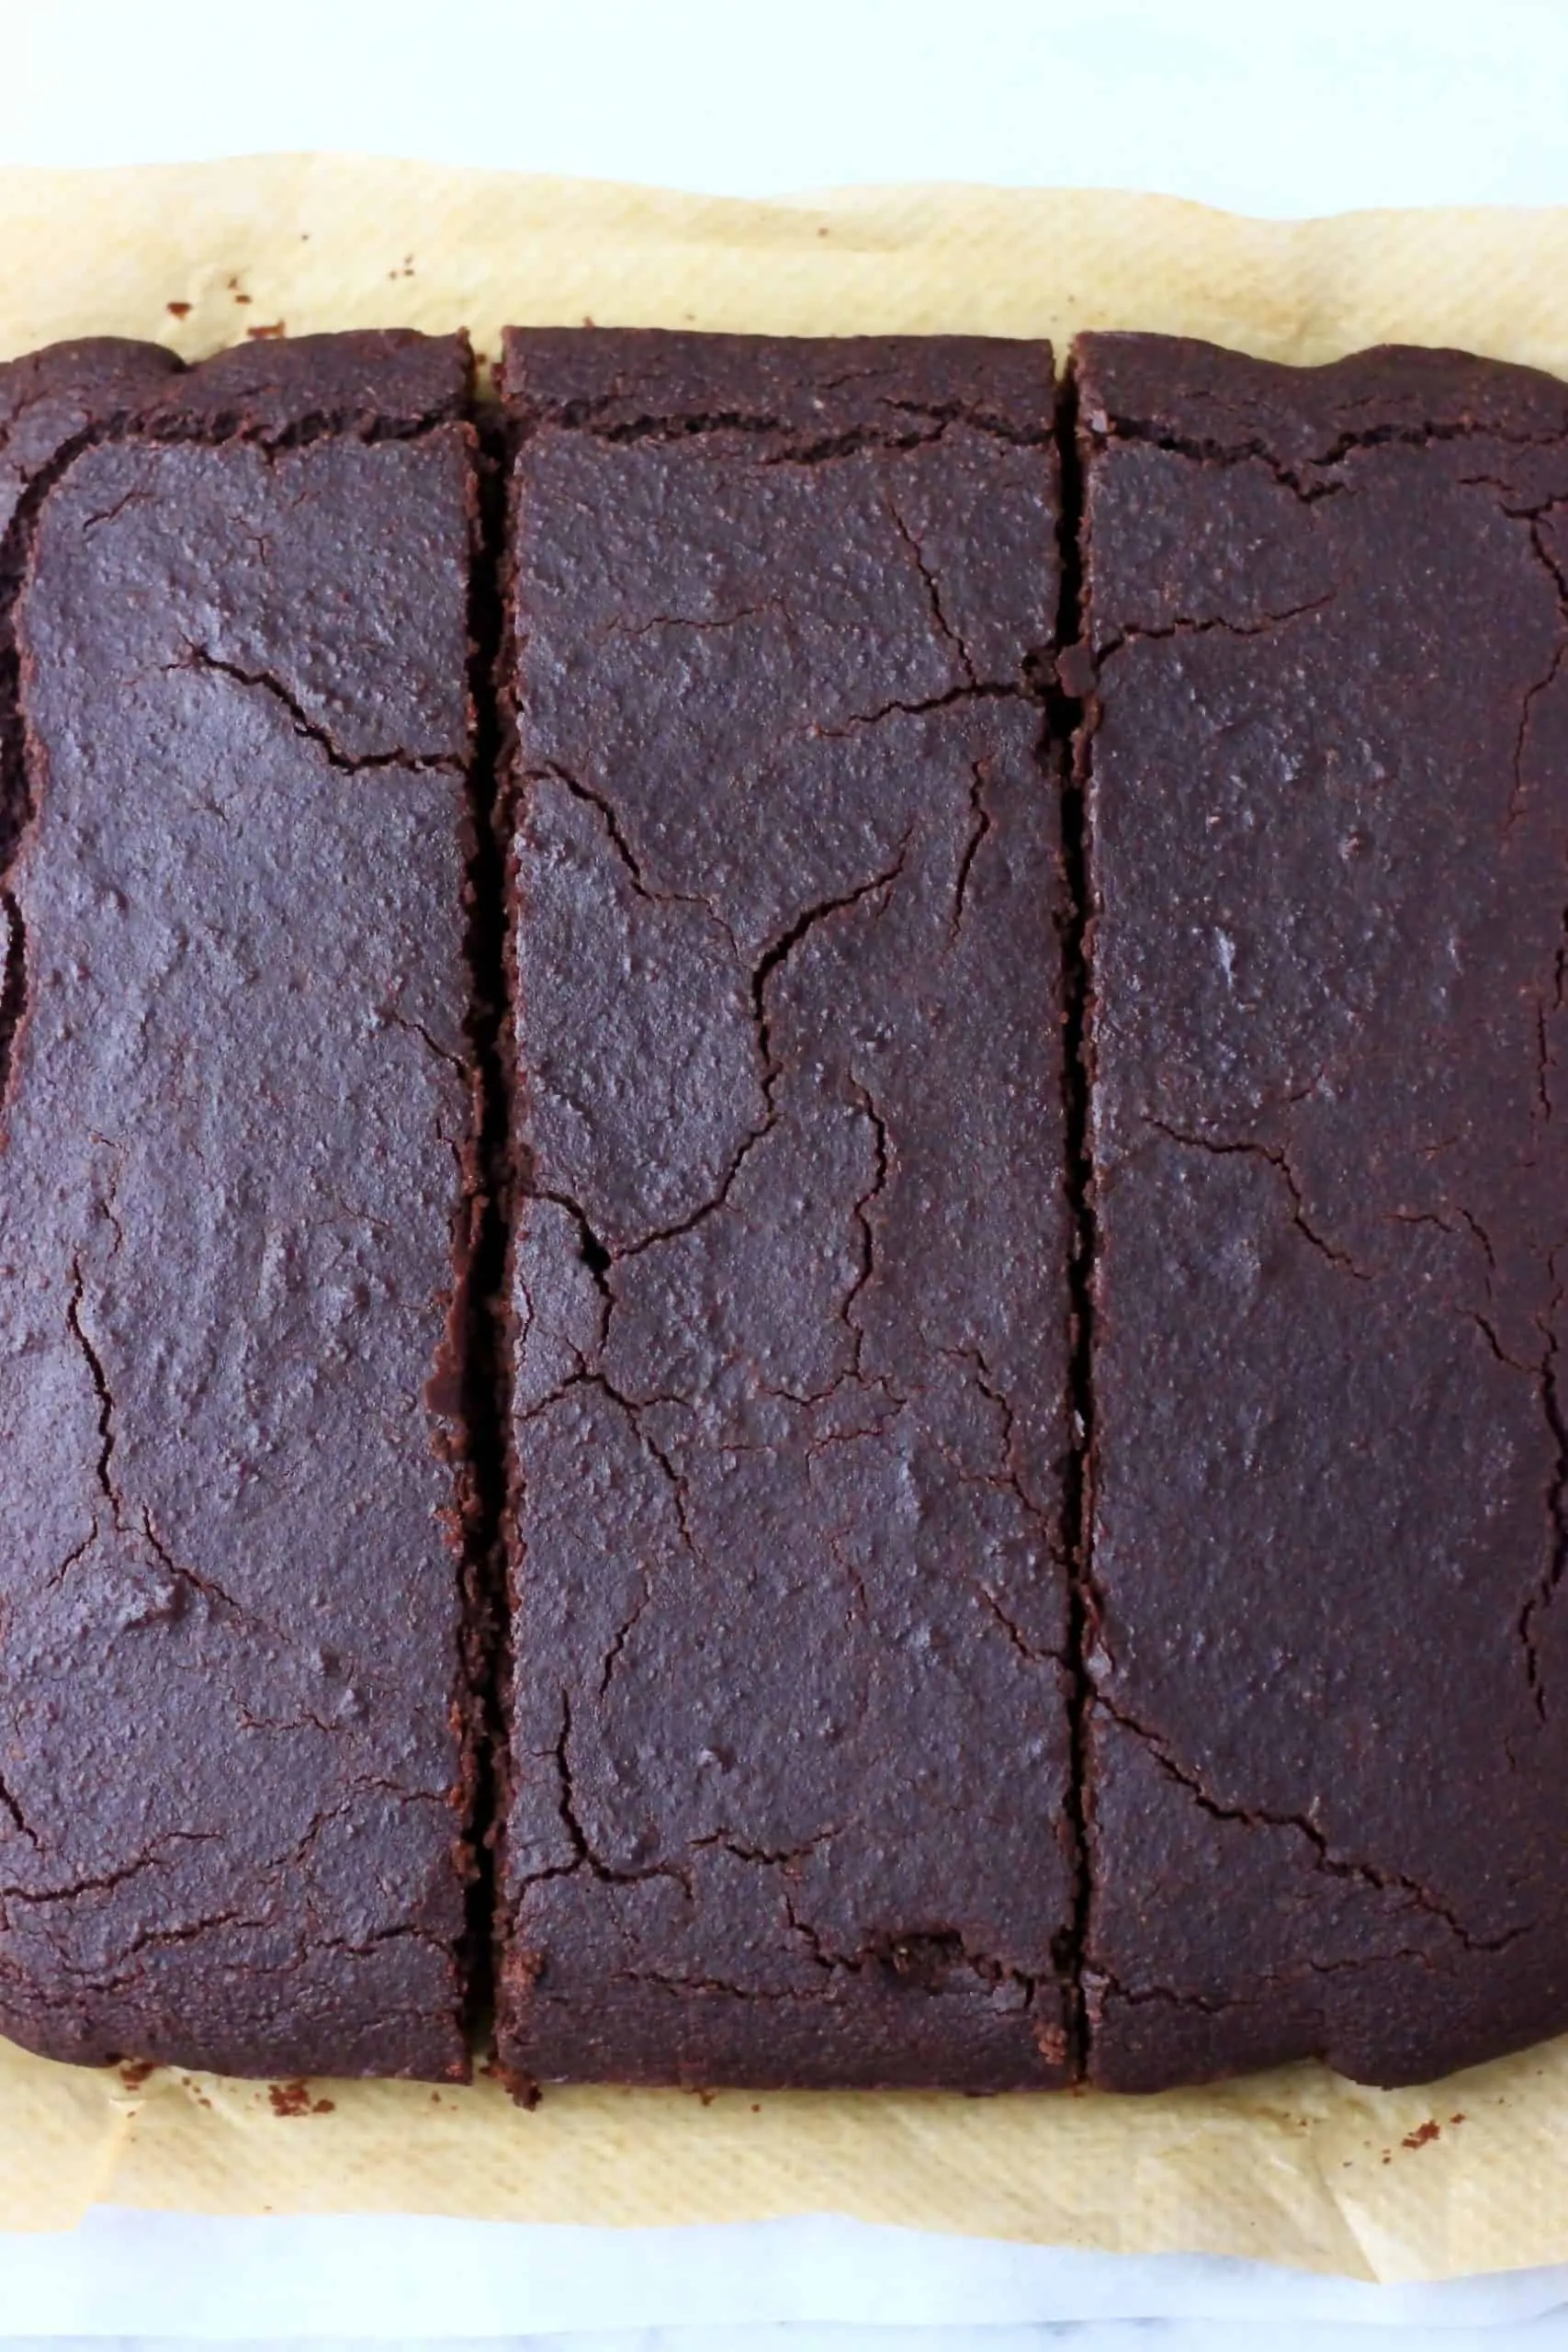 Square vegan chocolate sponge cake cut into three